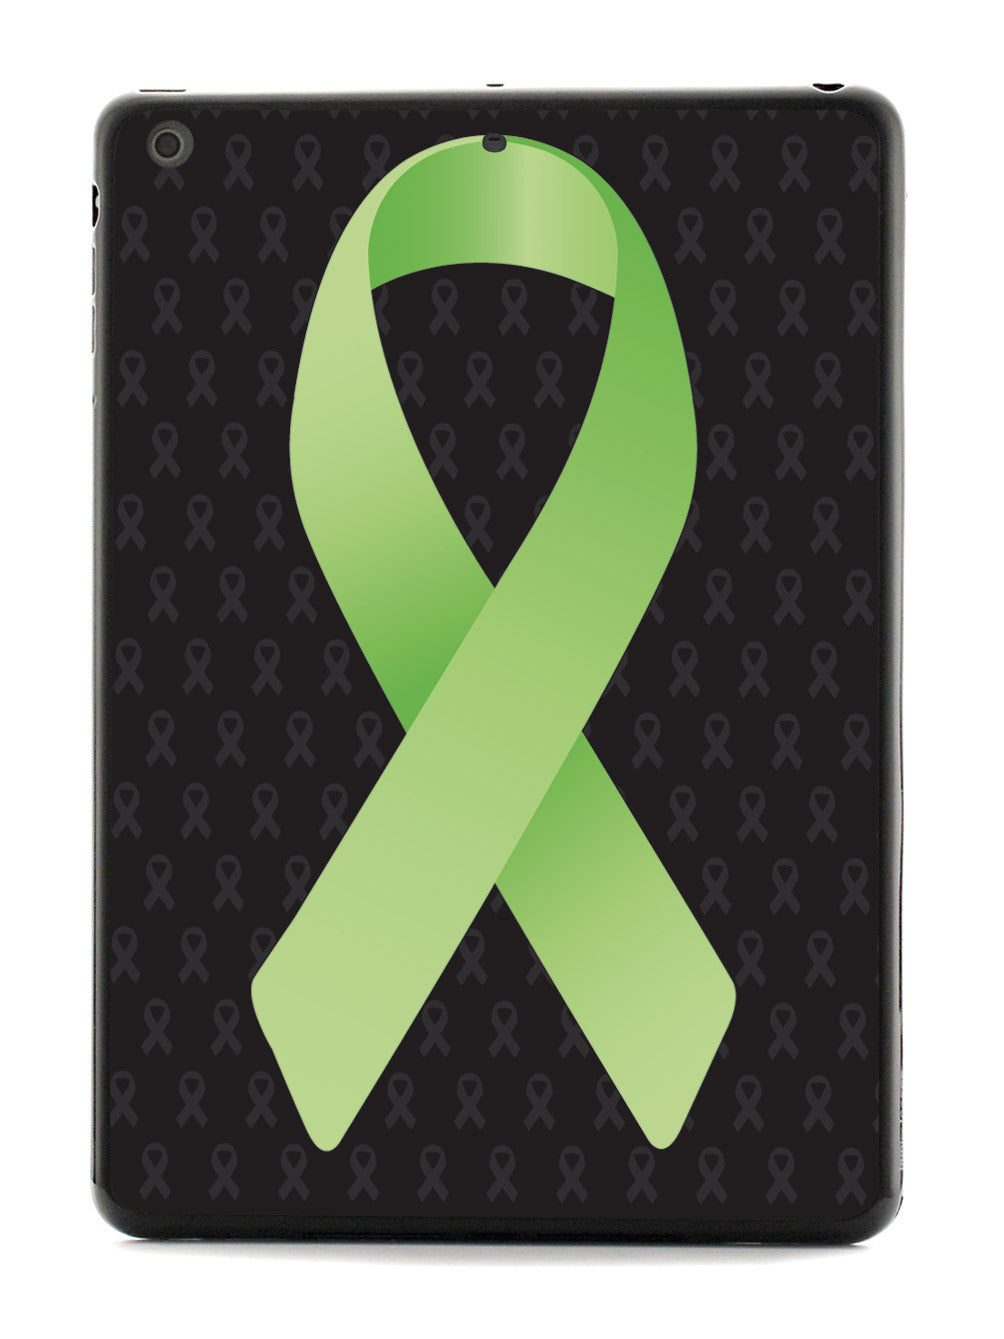 Lime Green Awareness Ribbon - Black Case